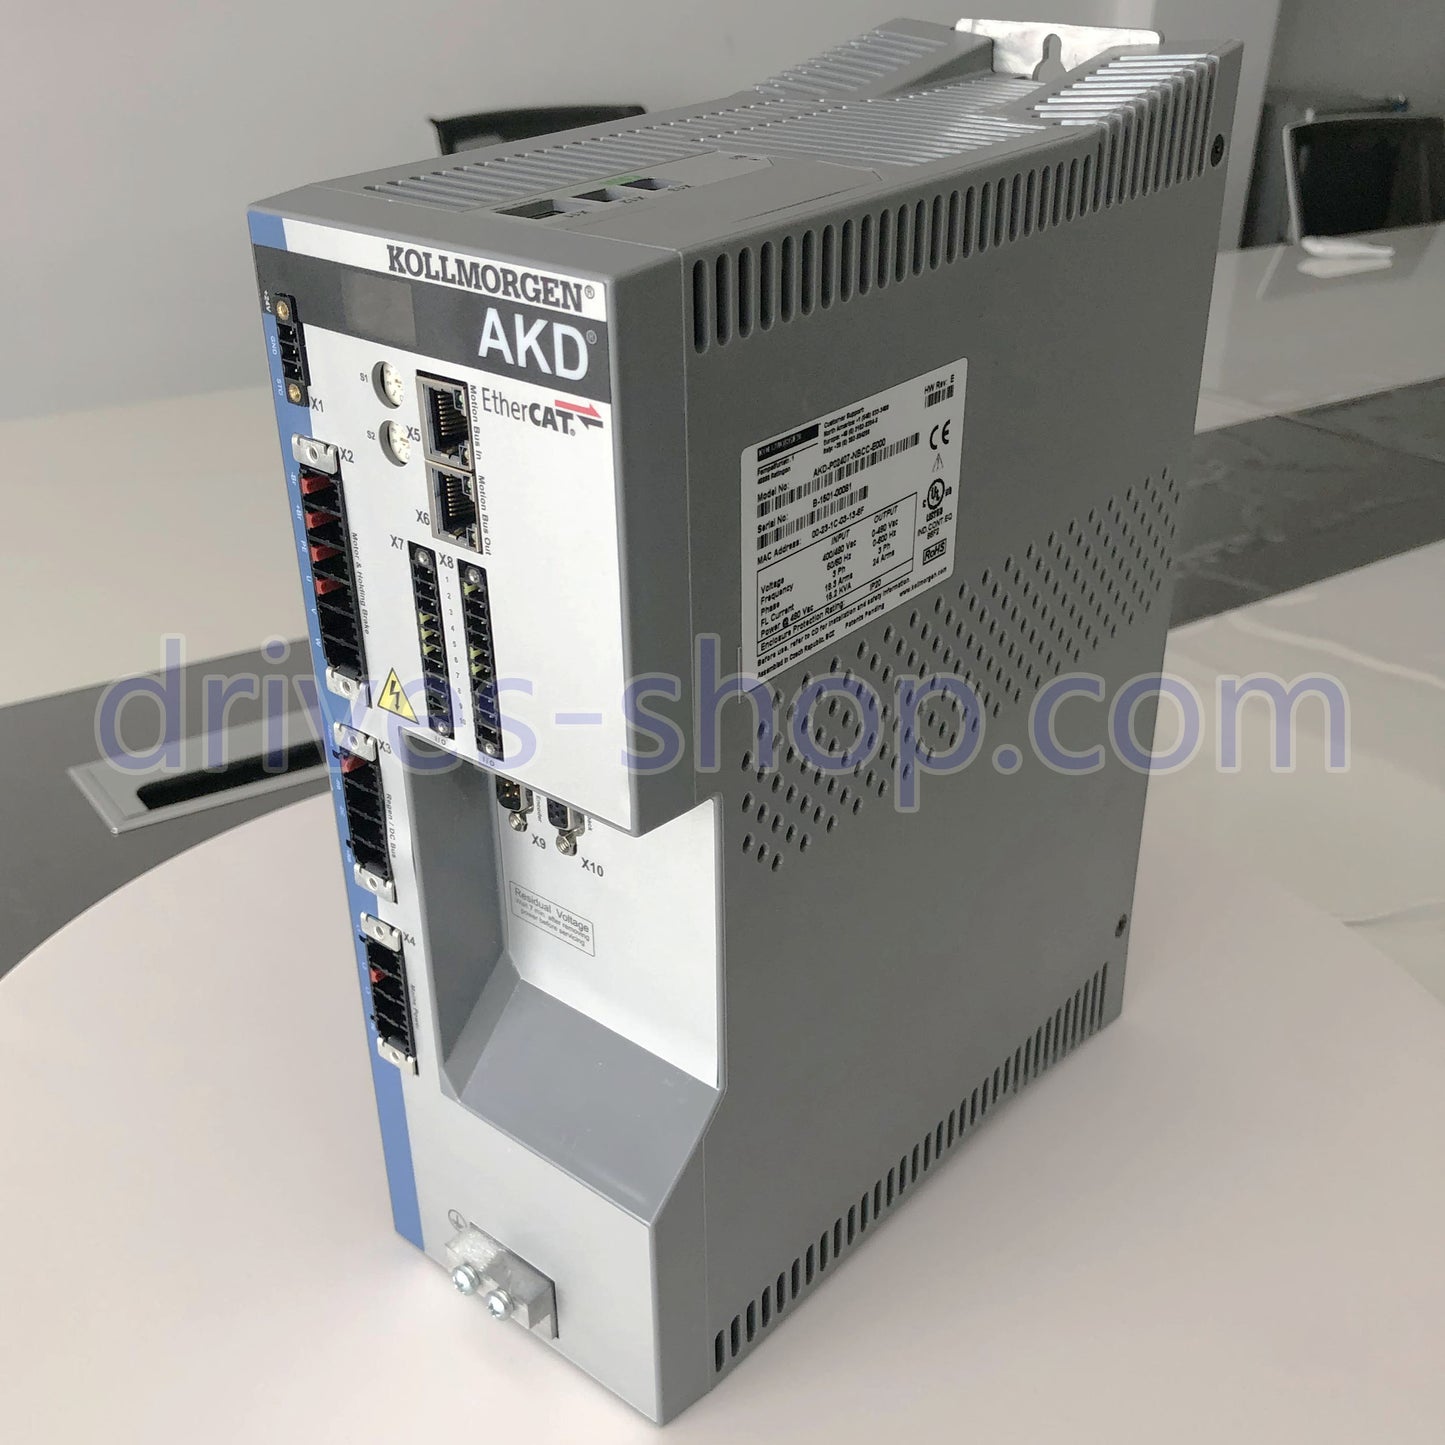 1PC New In Box Kollmorgen AKD-P02407-NBCC-E000 AKD Series Servo Drive VIA DHL